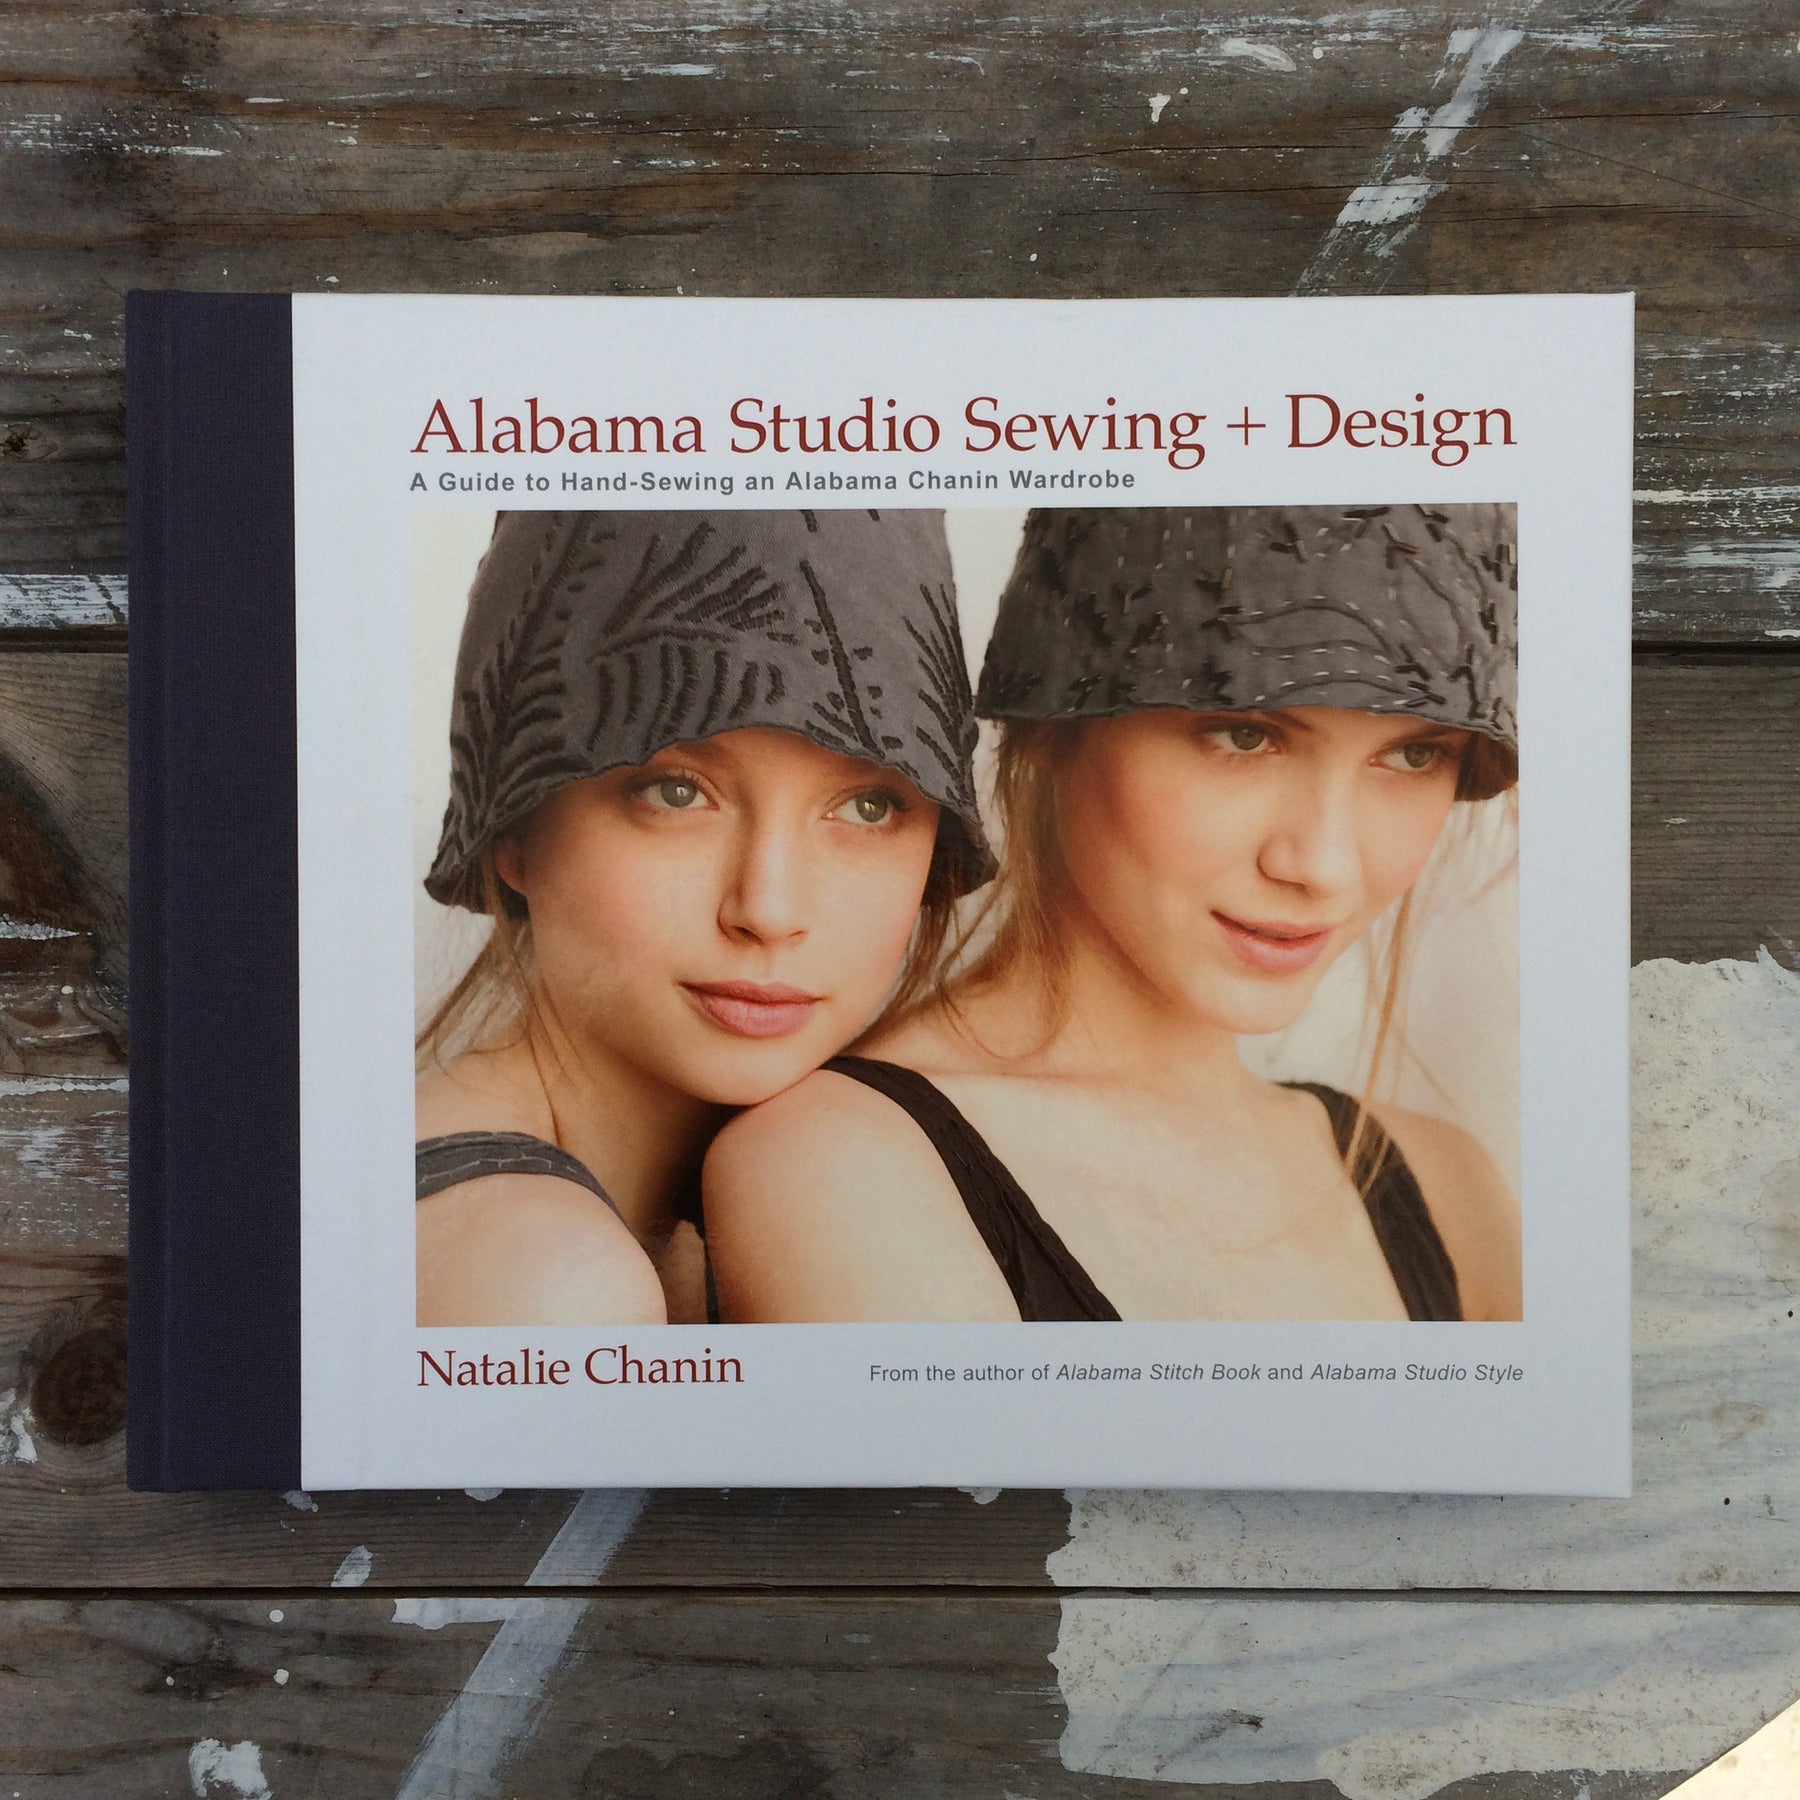 Alabama Studio Sewing + Design by Natalie Chanin